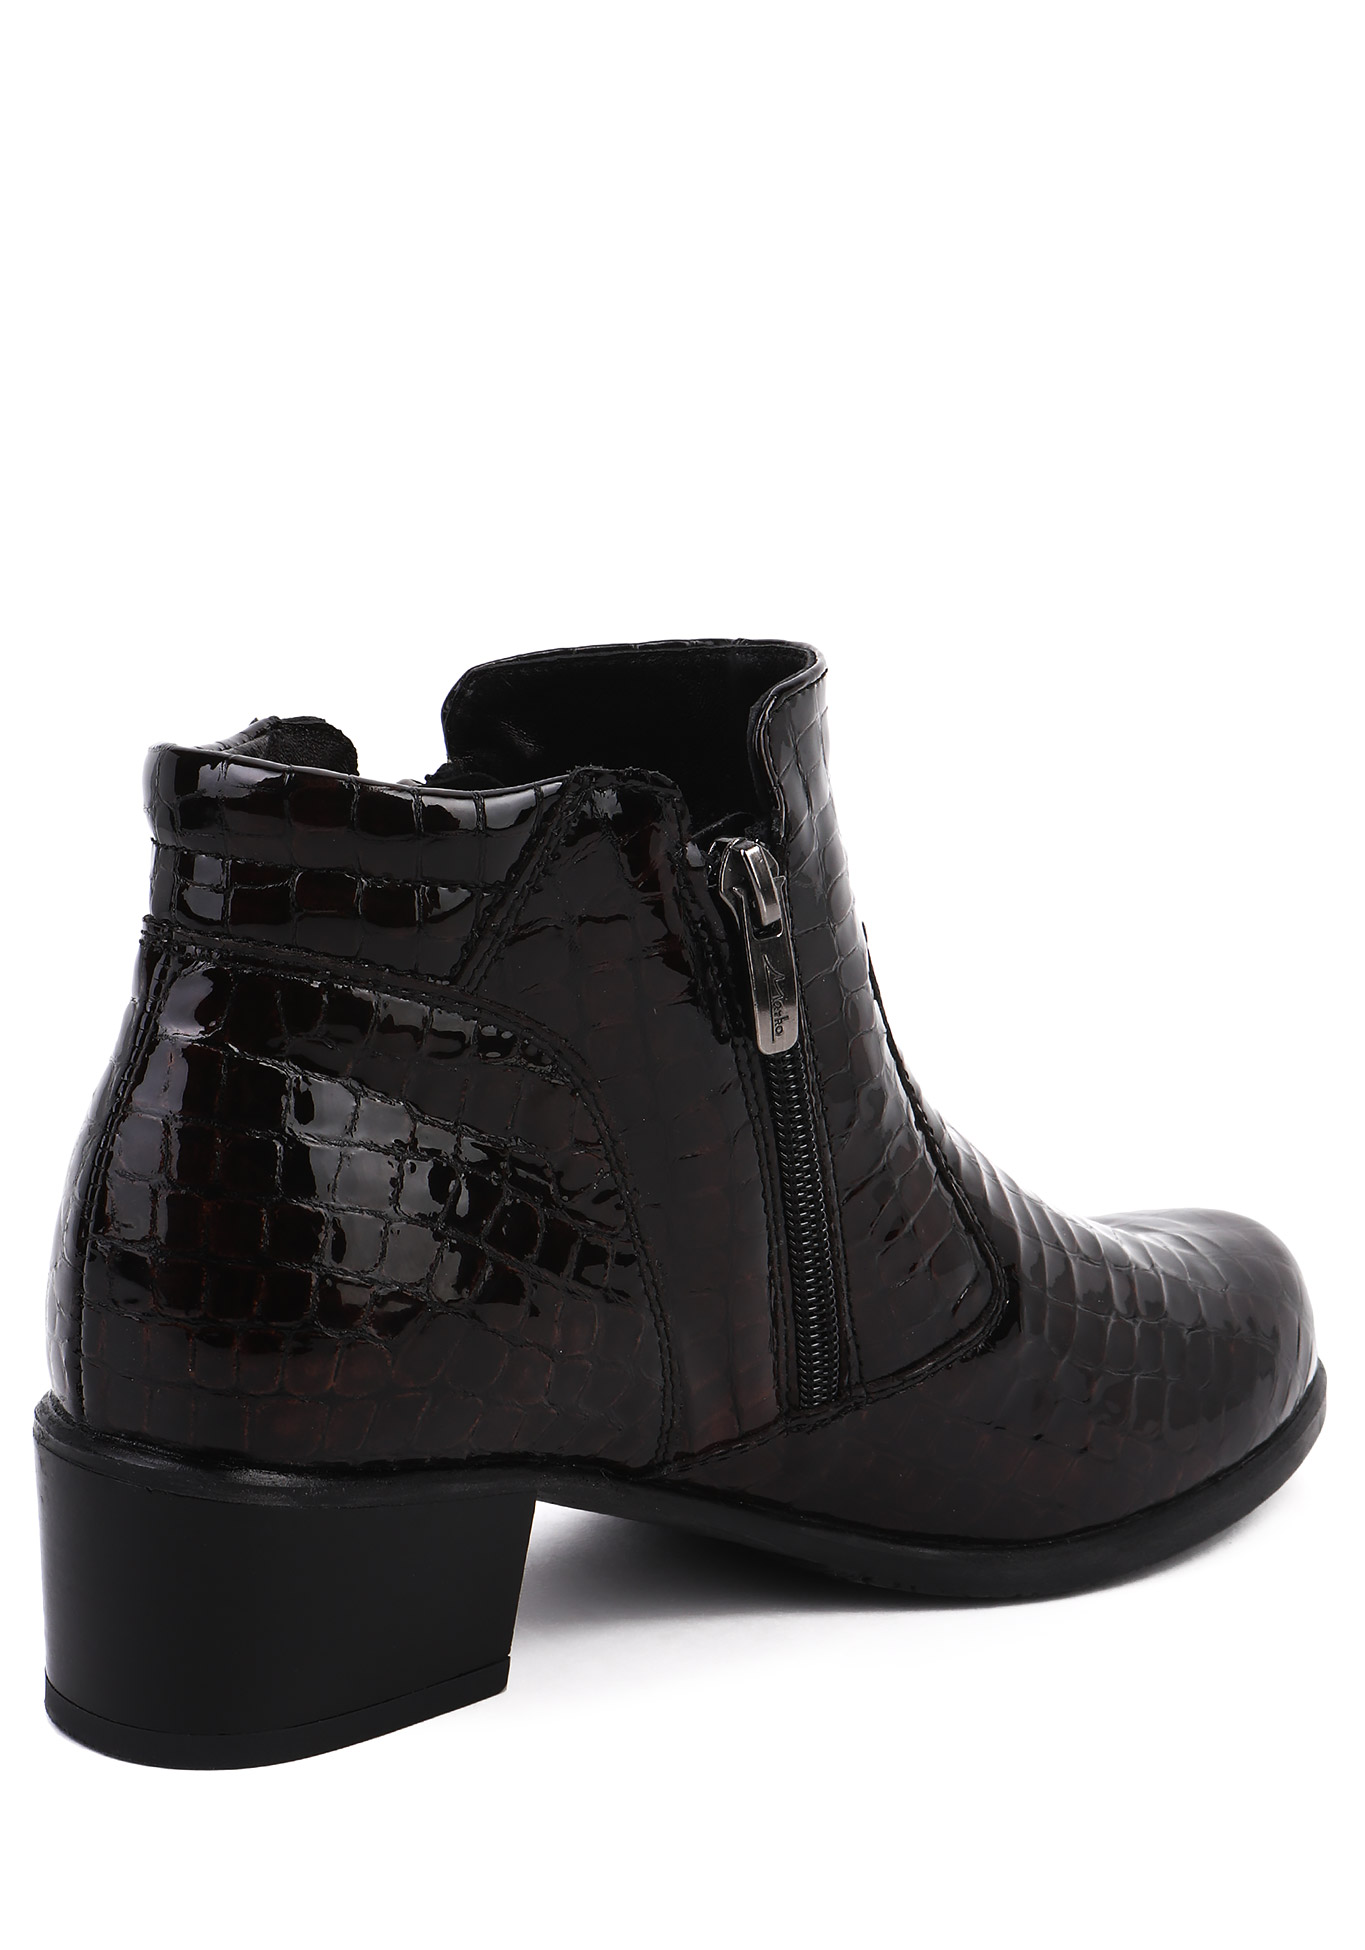 Ботинки женские "Брина" Marko, размер 37, цвет тёмно-коричневый - фото 3